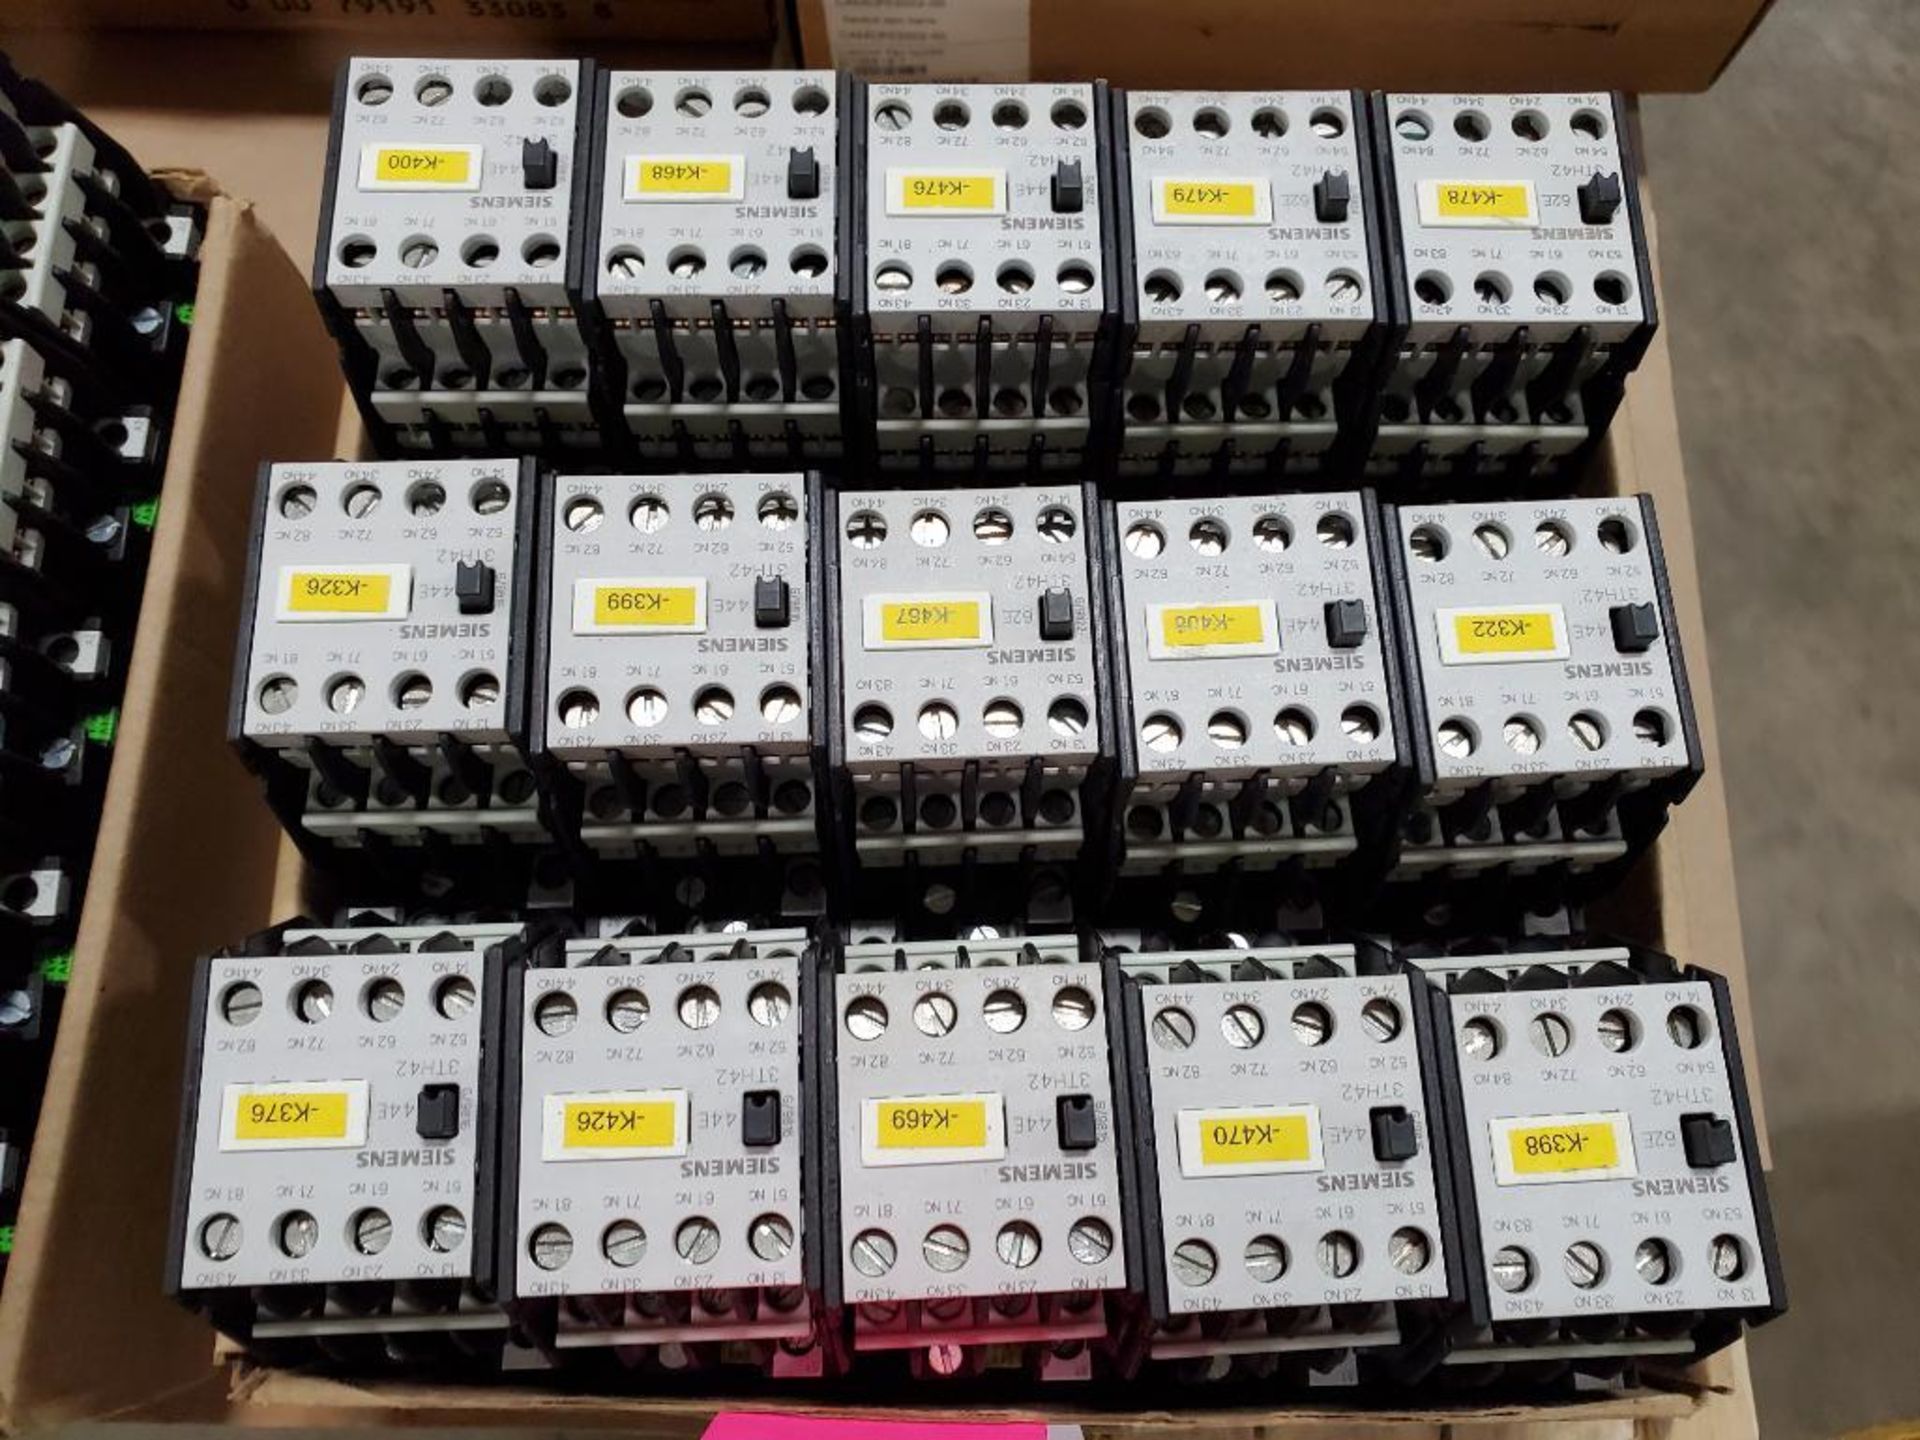 Qty 15 - Siemens contactors. - Image 2 of 7